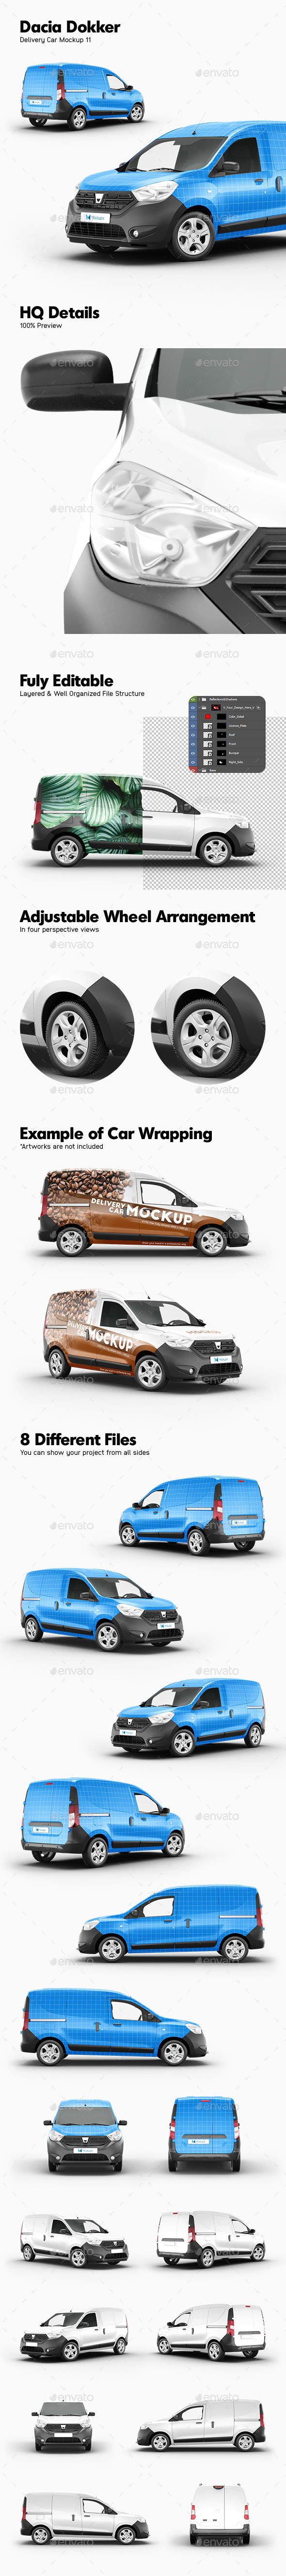 Dacia Dokker van vector drawing